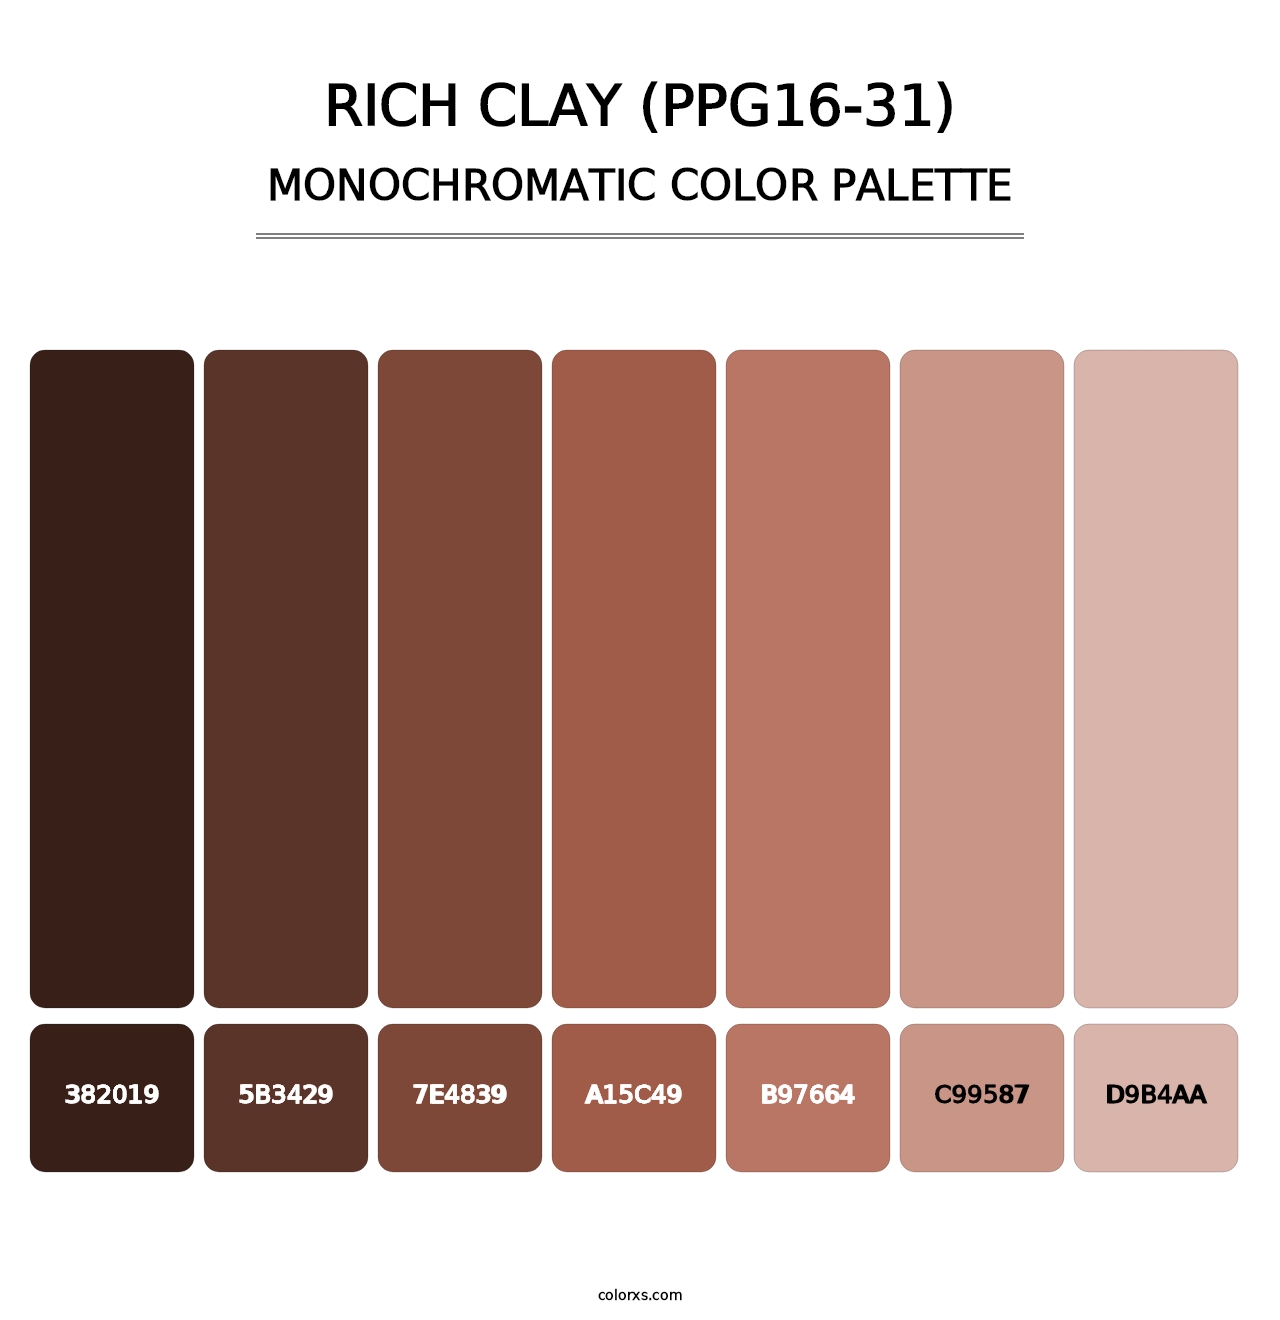 Rich Clay (PPG16-31) - Monochromatic Color Palette